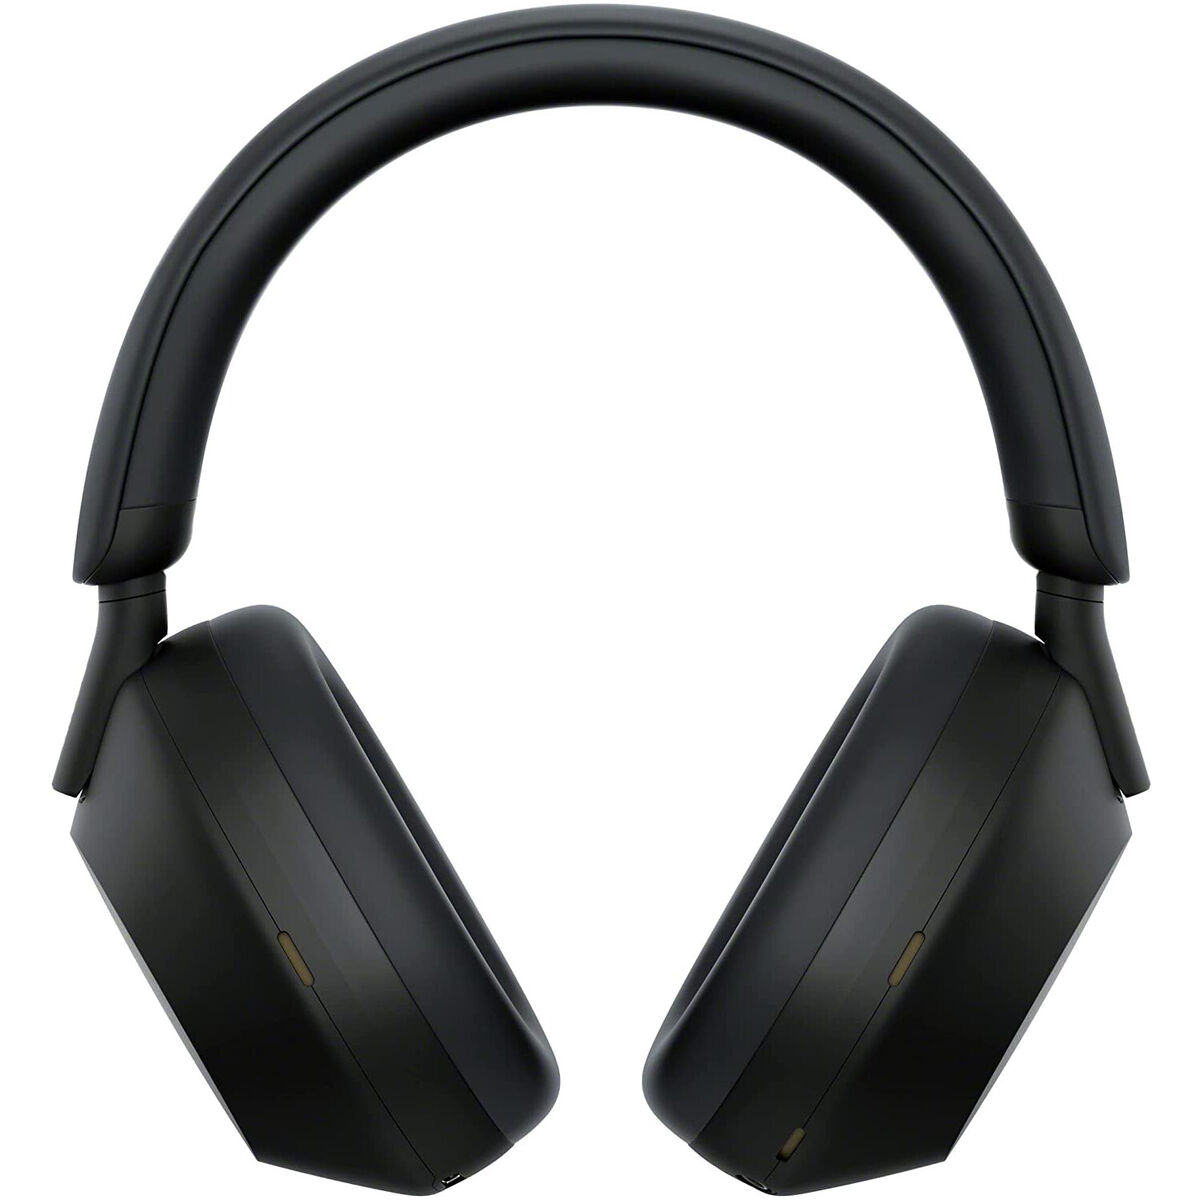 Sony Wireless Industry Leading Noise Canceling Headphones in Black